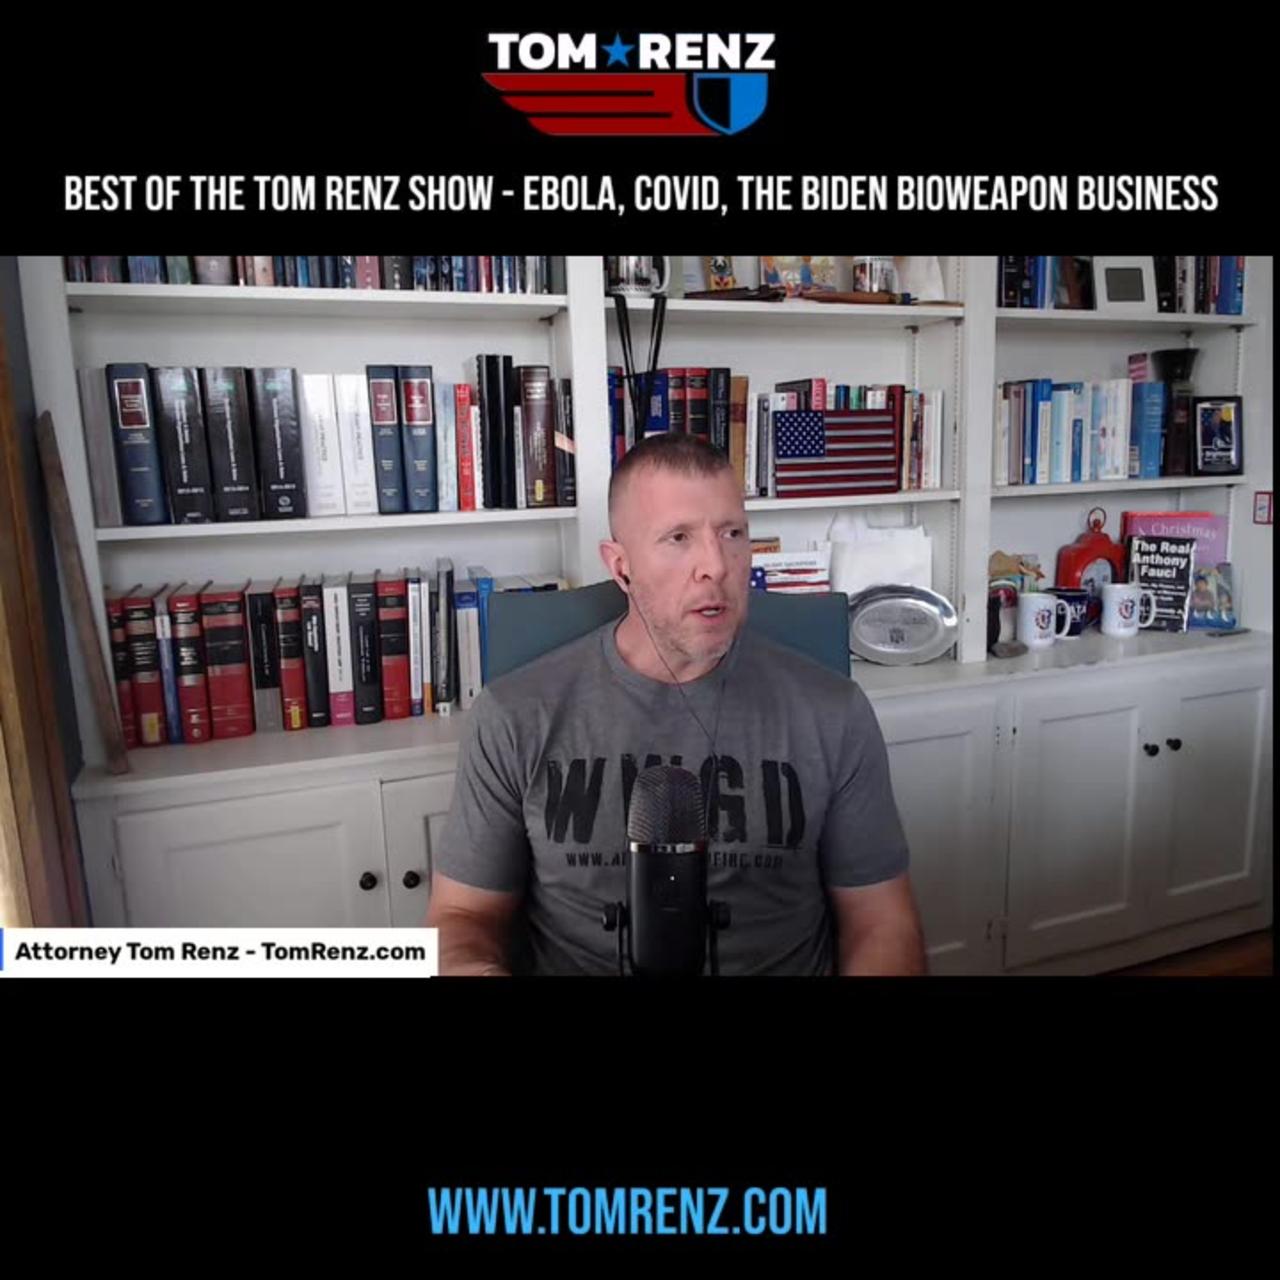 Tom Renz - Best of The Tom Renz Show, "Ebola, COVID, The Biden Bioweapon Business"